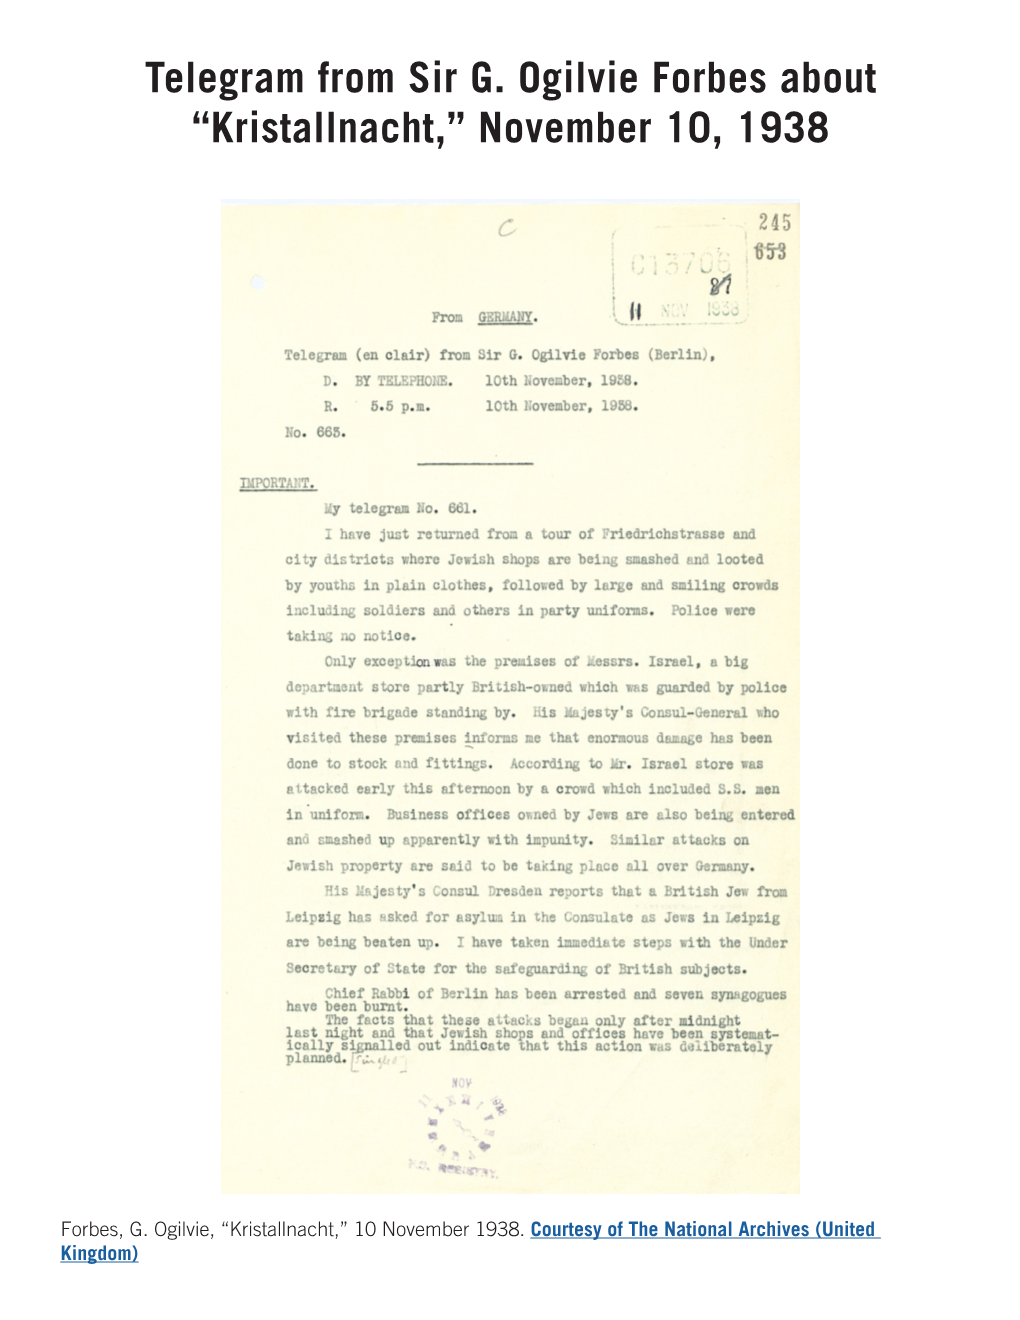 Telegram from Sir G. Ogilvie Forbes About “Kristallnacht,” November 10, 1938